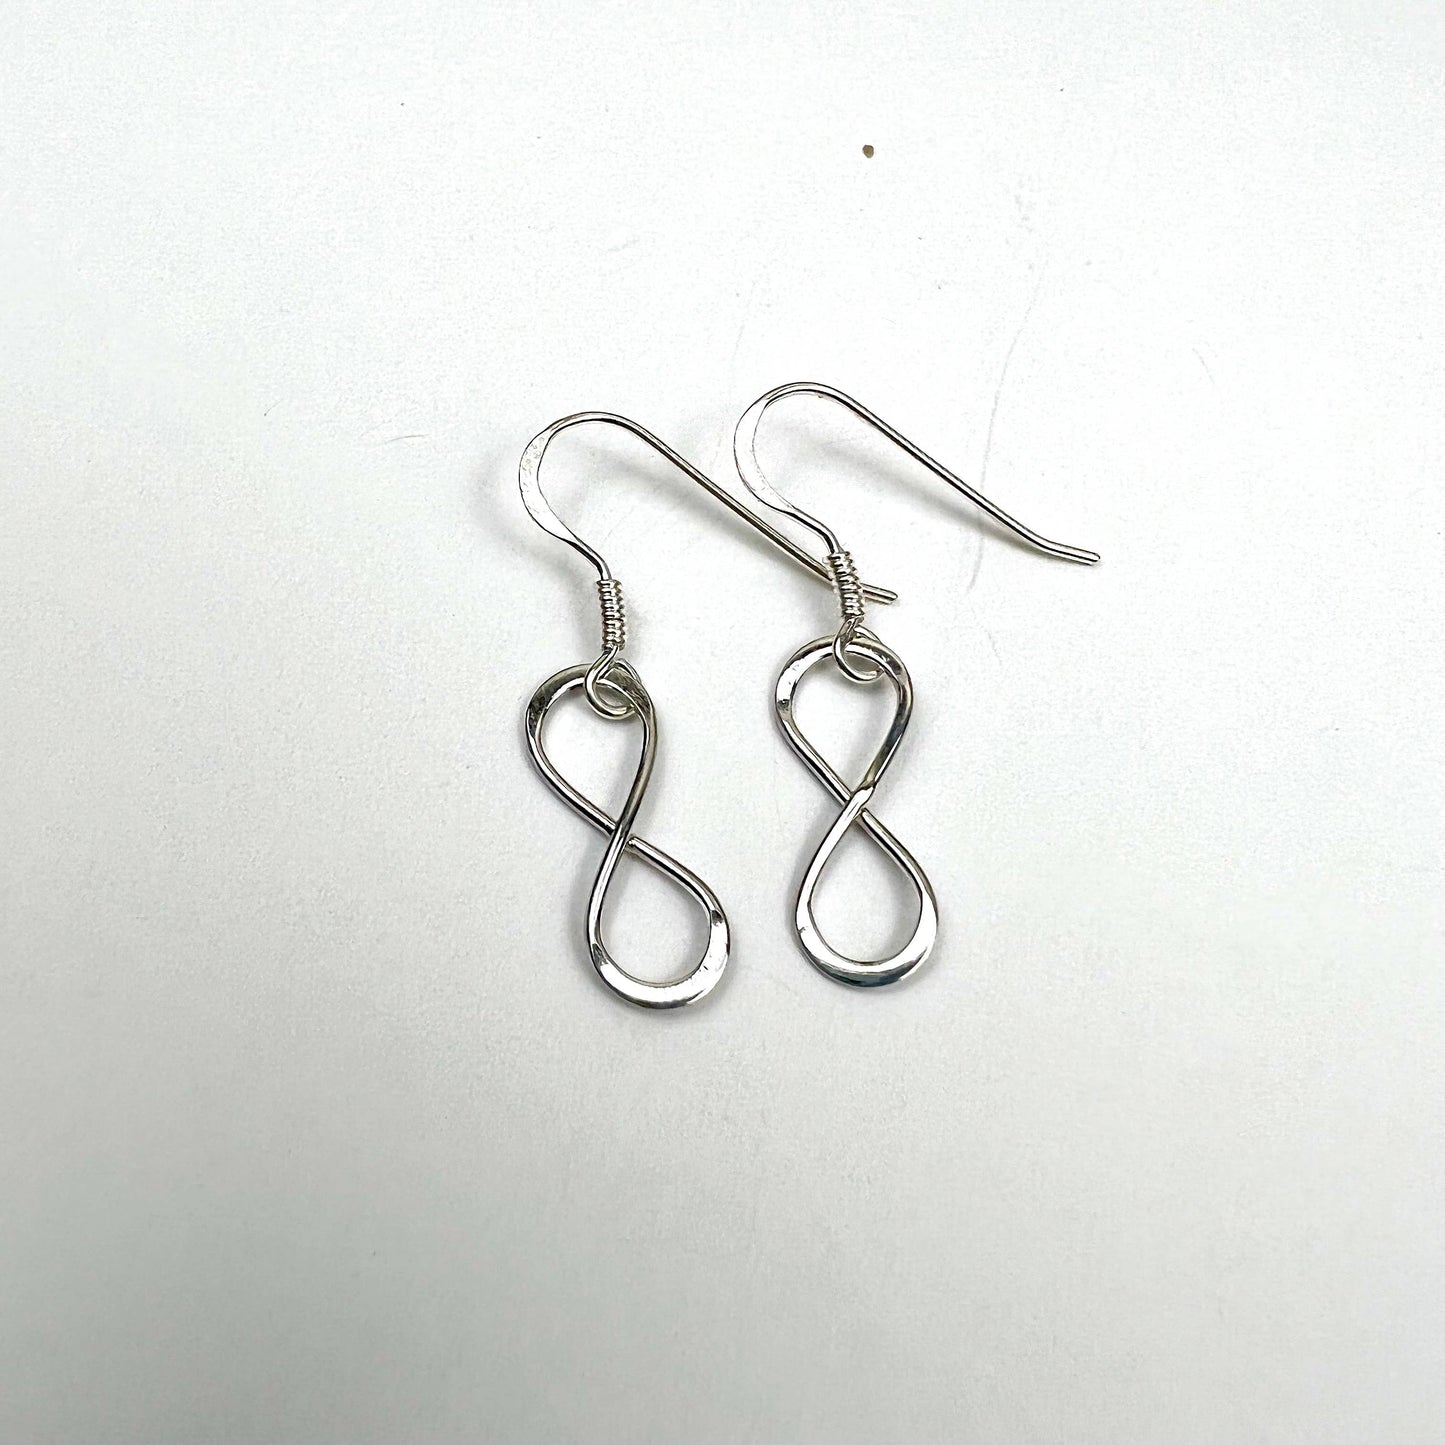 Jackie Gallagher Designs - Infinity Sterling silver dangle earrings